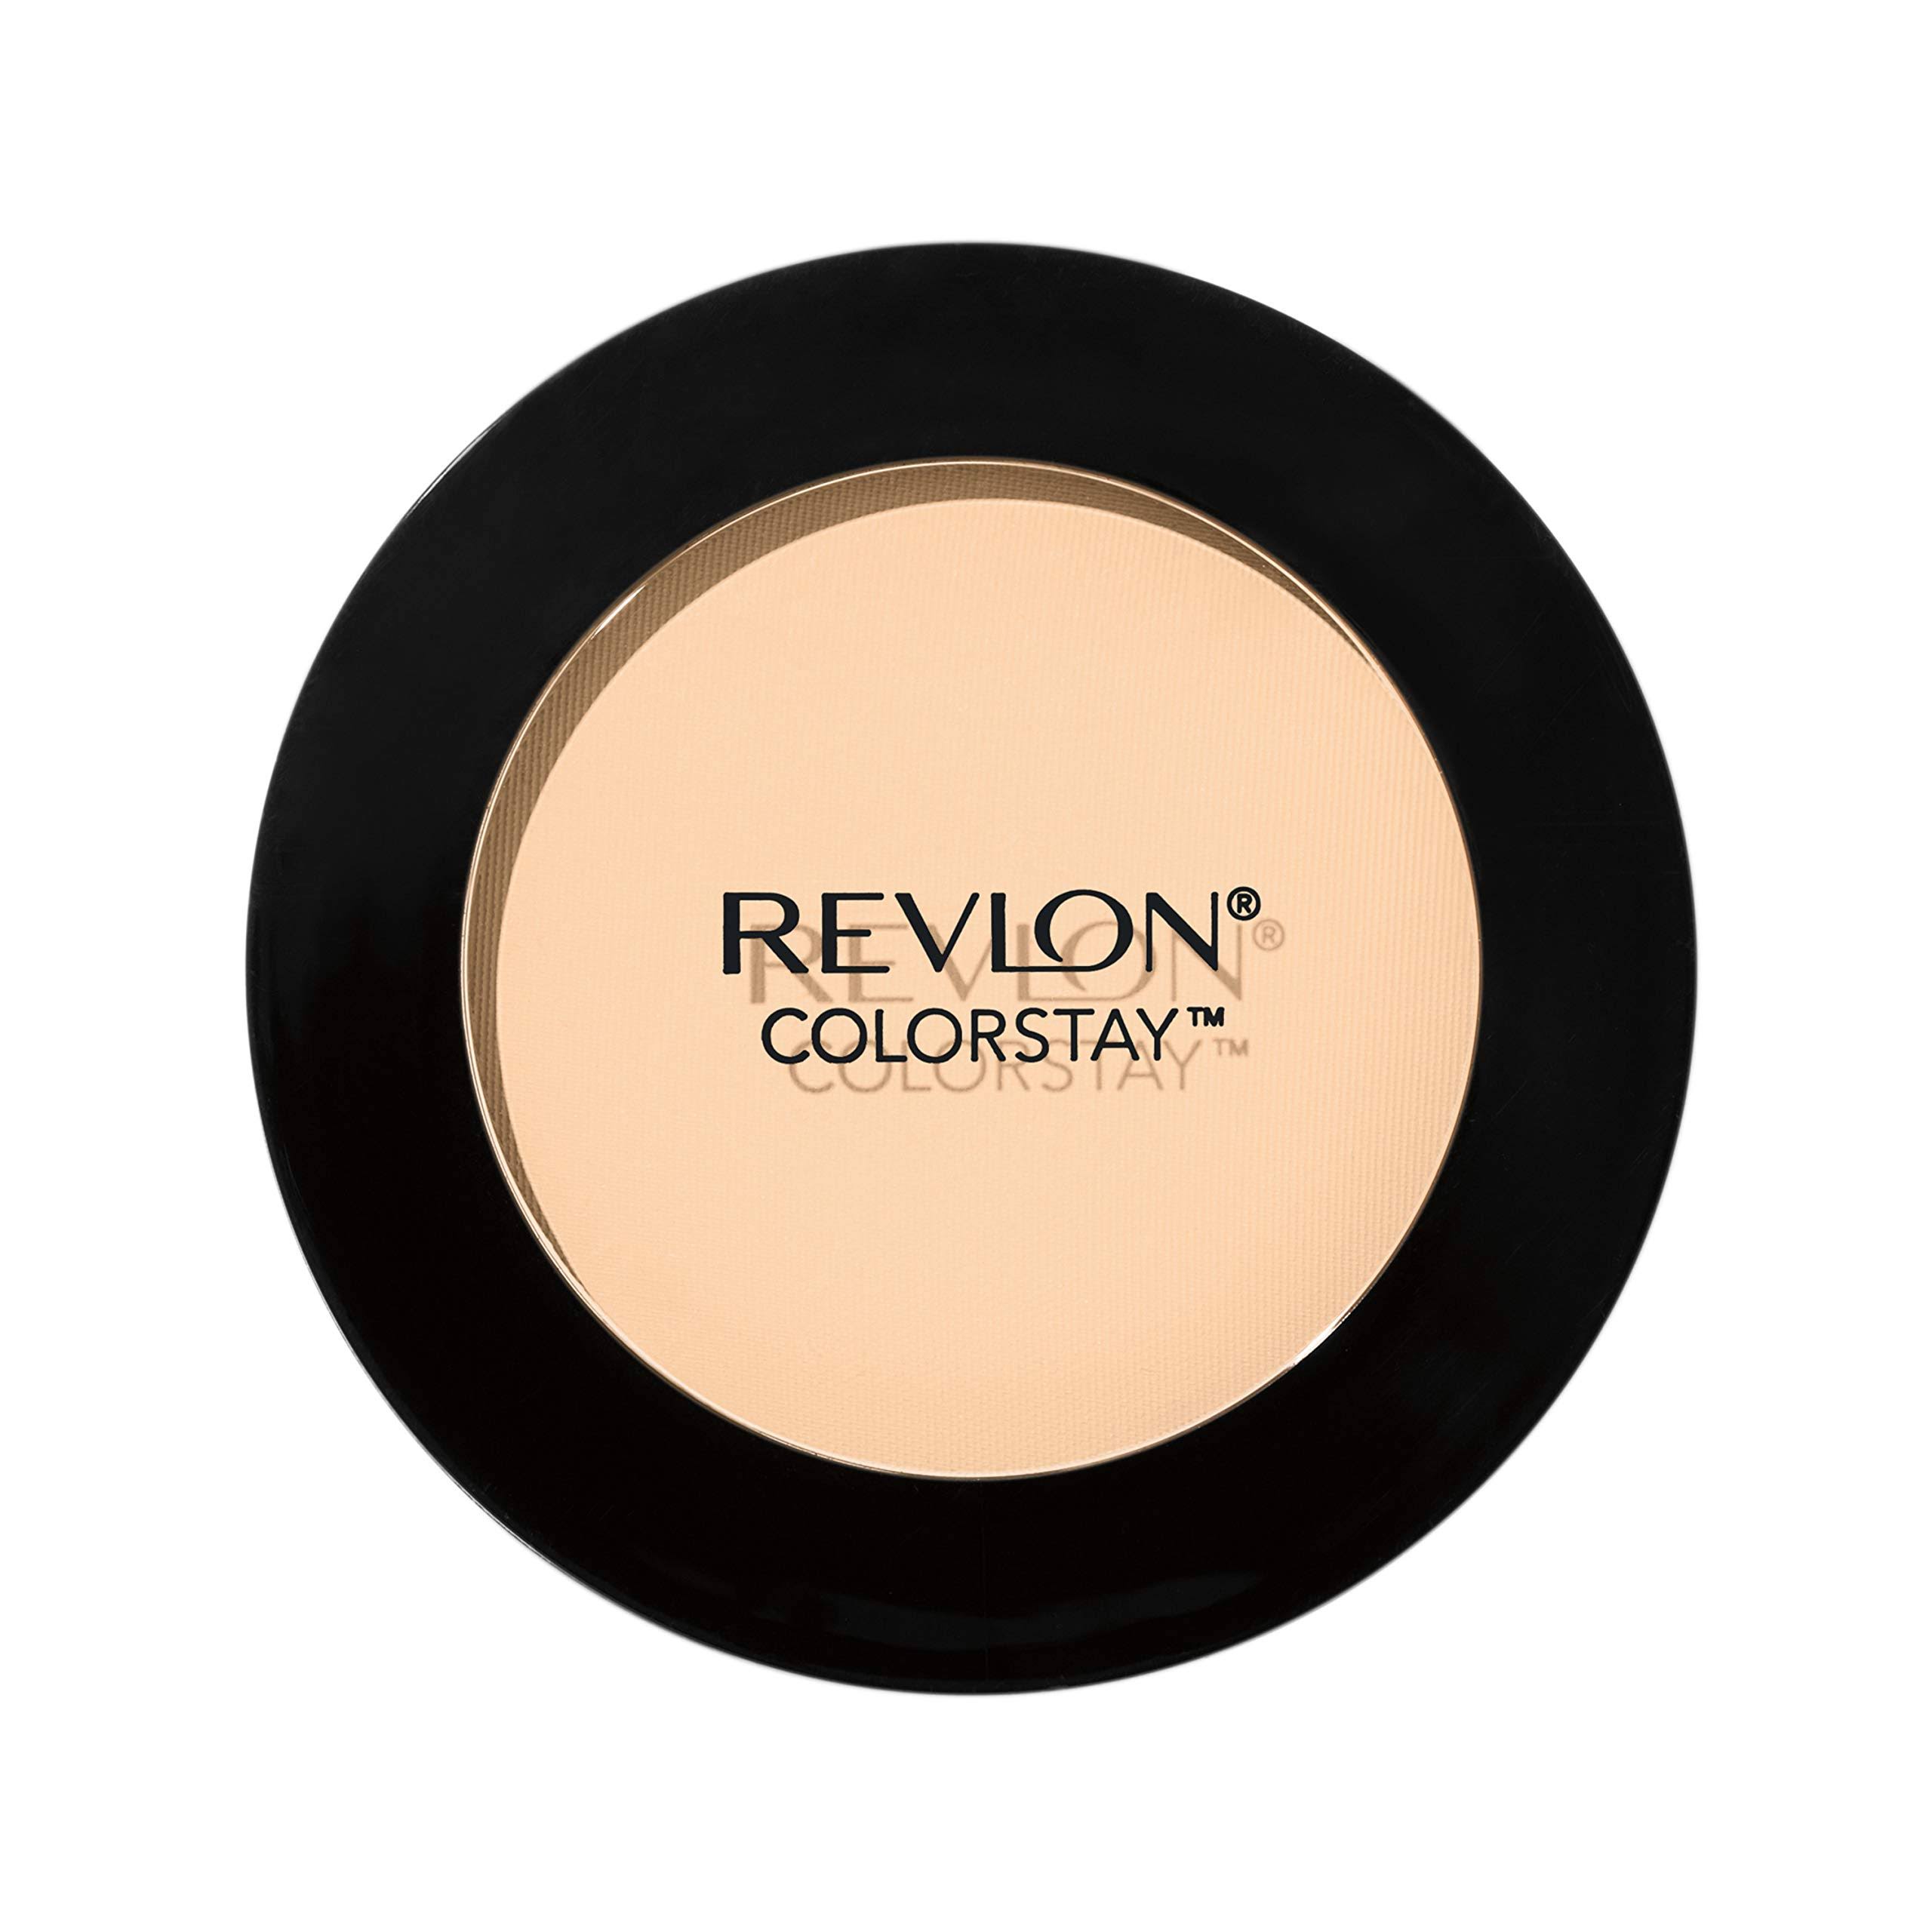 Revlon Colorstay Pressed Powder - Light, 0.3oz